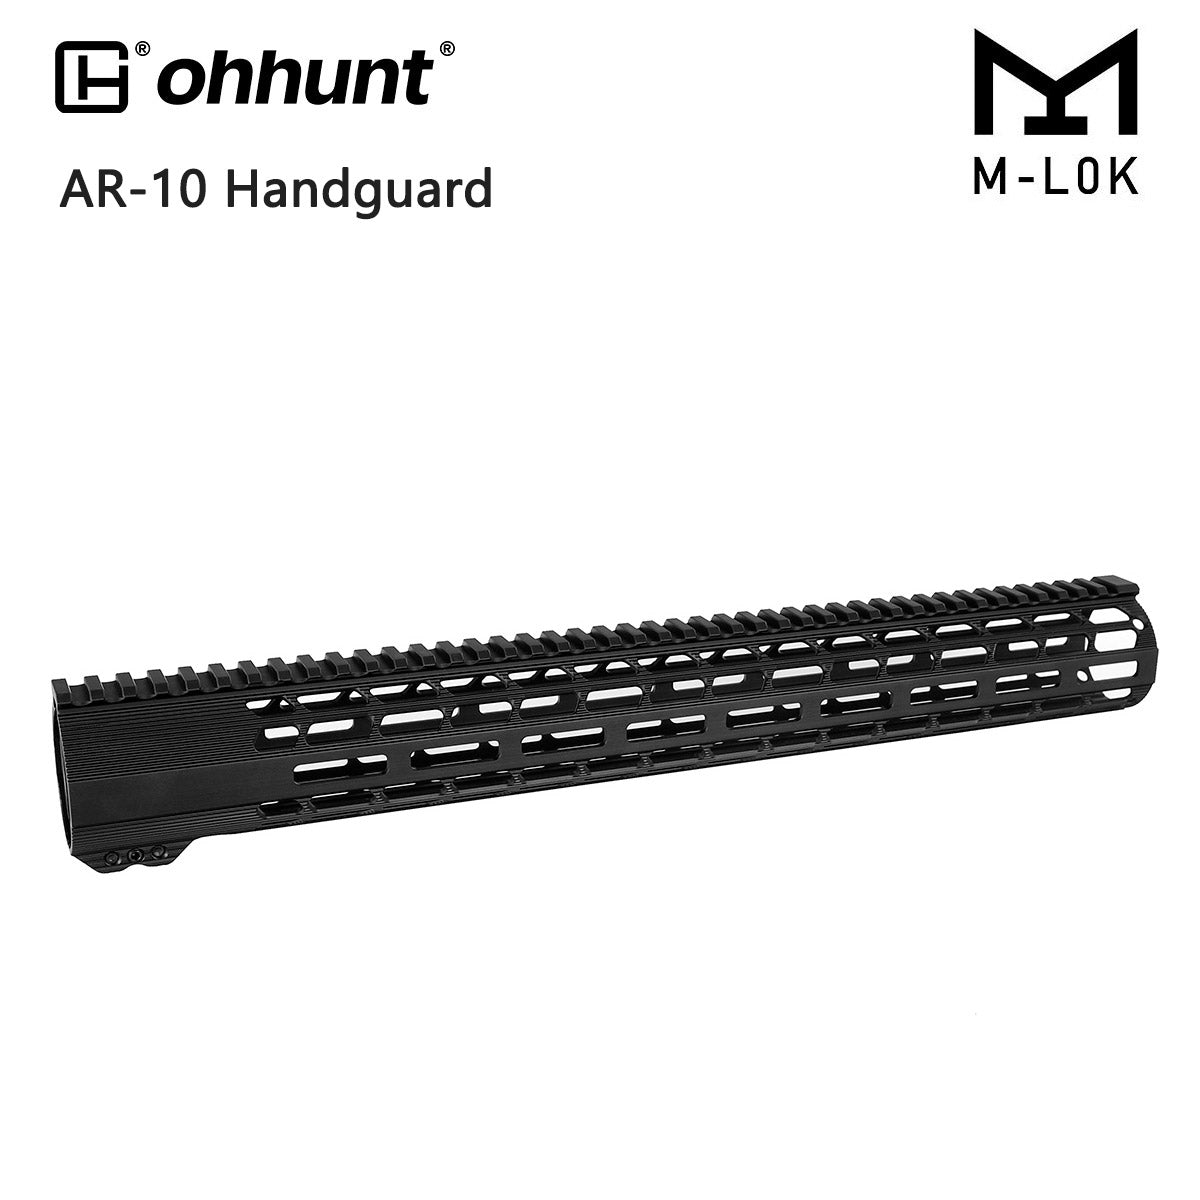 ohhunt® Lightweight AR10 LR308 Mlok Handguard with Barrel Nut - 17 inch